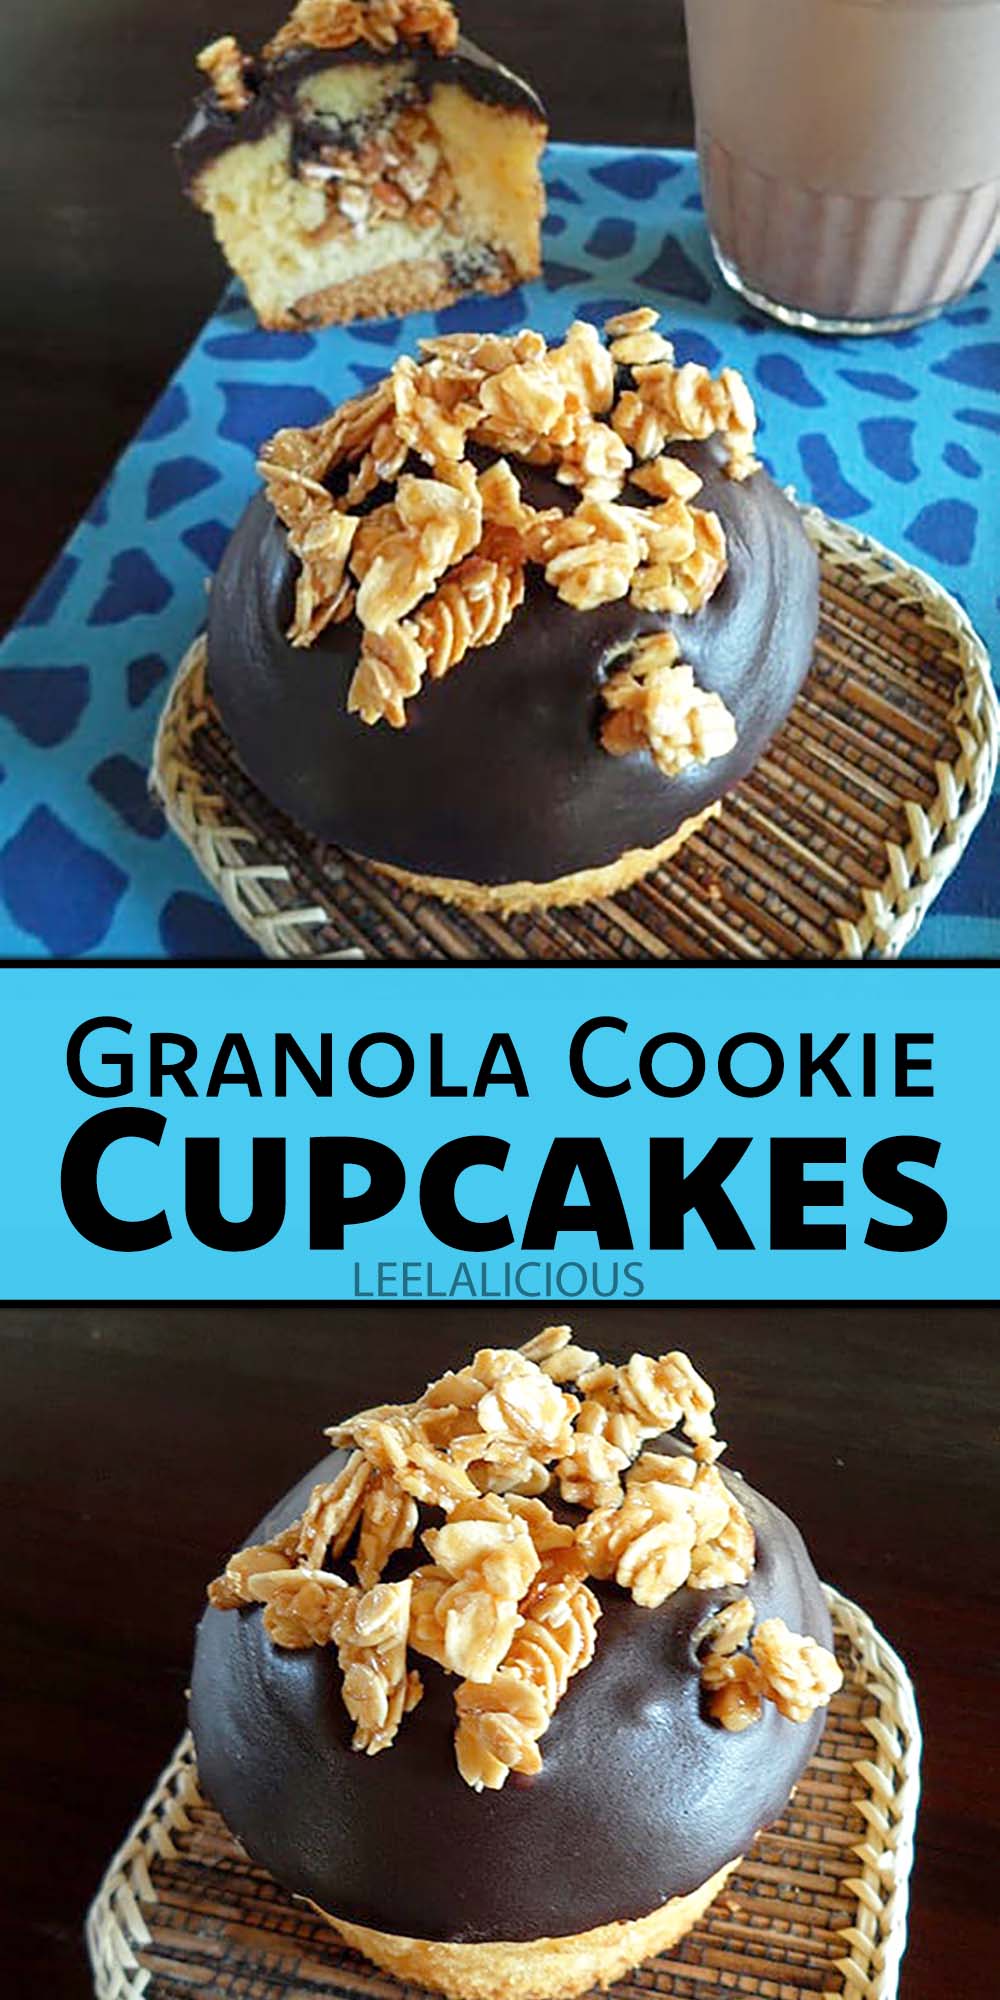 Granola Cookie Cupcakes